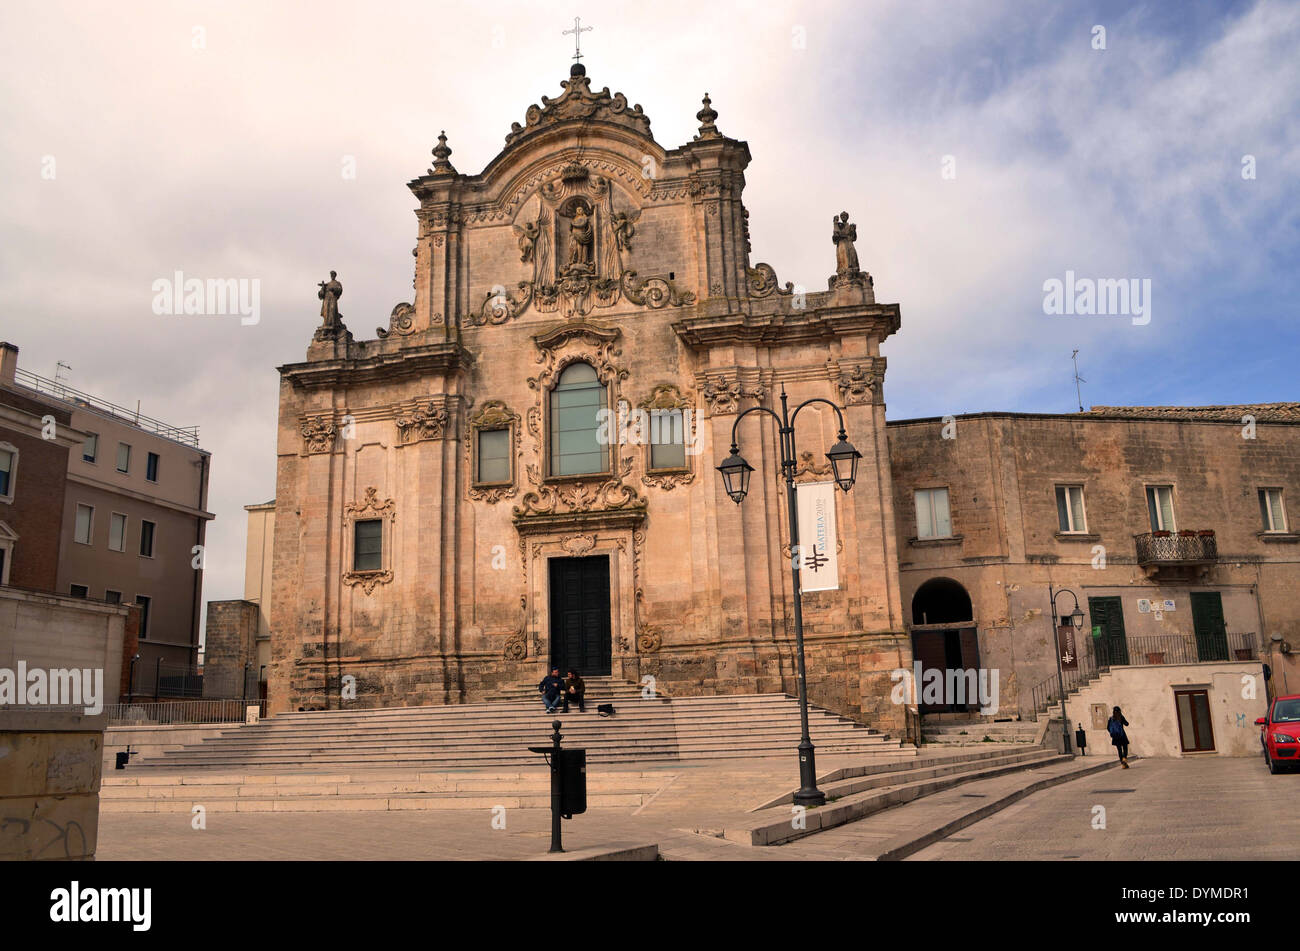 Matera,l'trogladytic città del sud Italia ha oltre 80 chiese, pic. mostra la chiesa di San Francesco di Assisi.Matera,l'tro Foto Stock